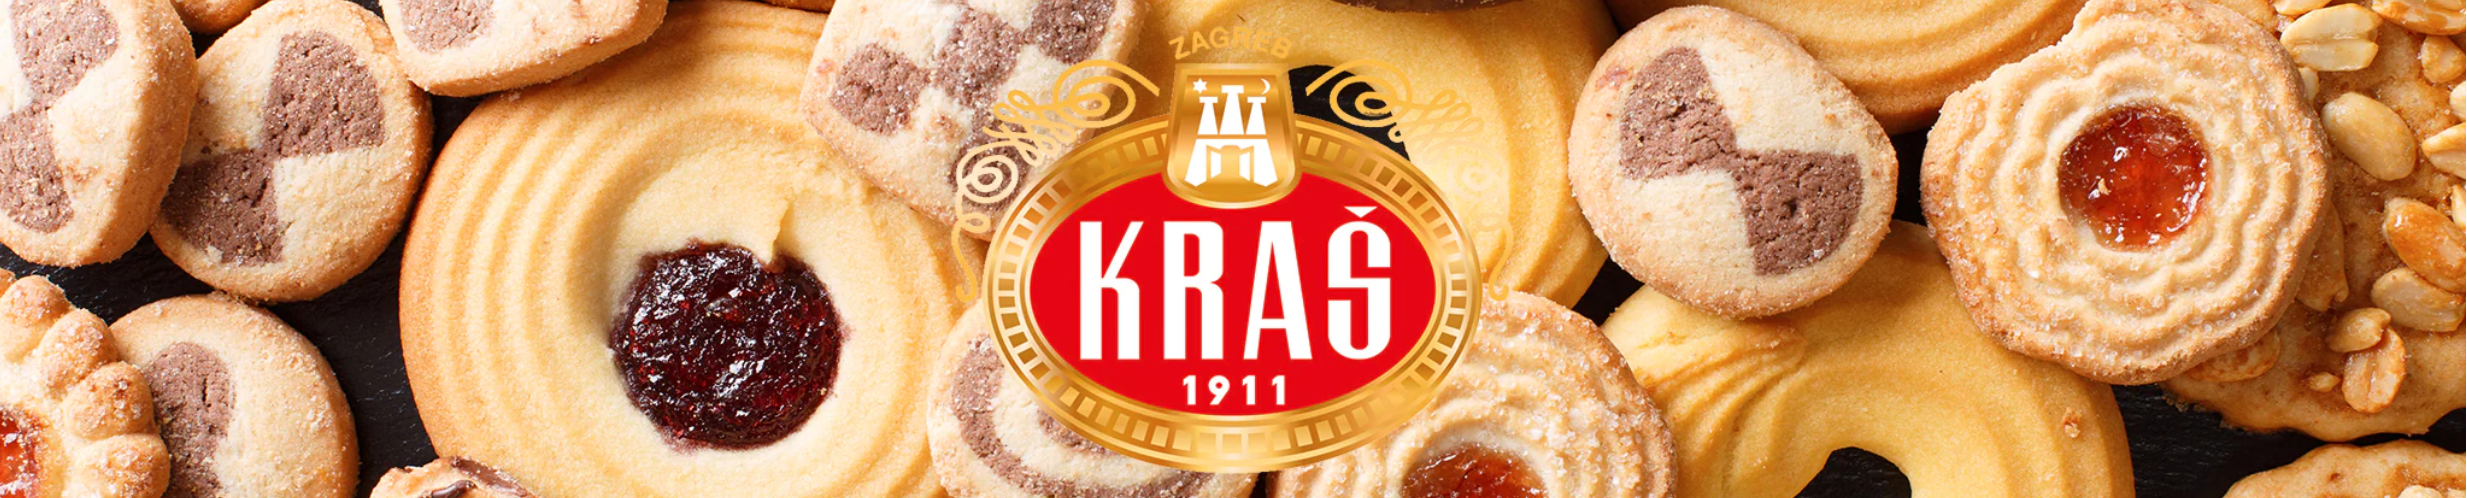 Kras - Global Imports & Exports Wholesale European Food Distributors